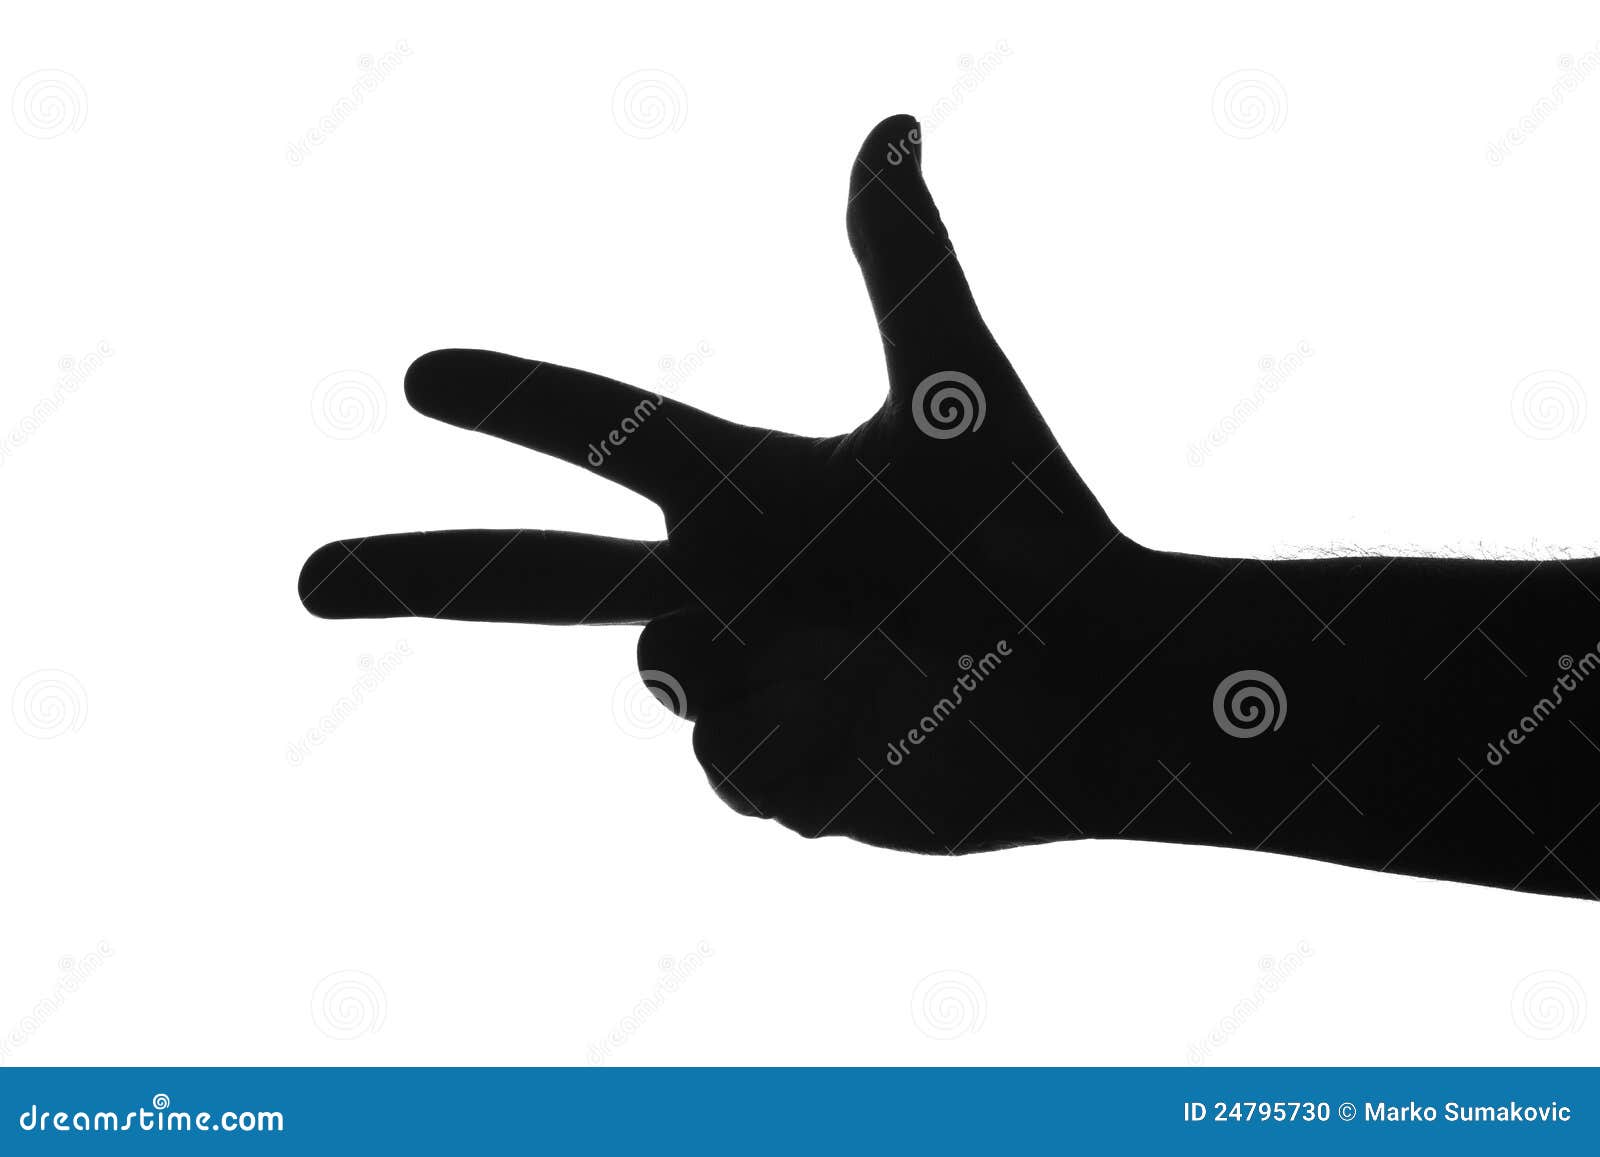 three fingers silhouette